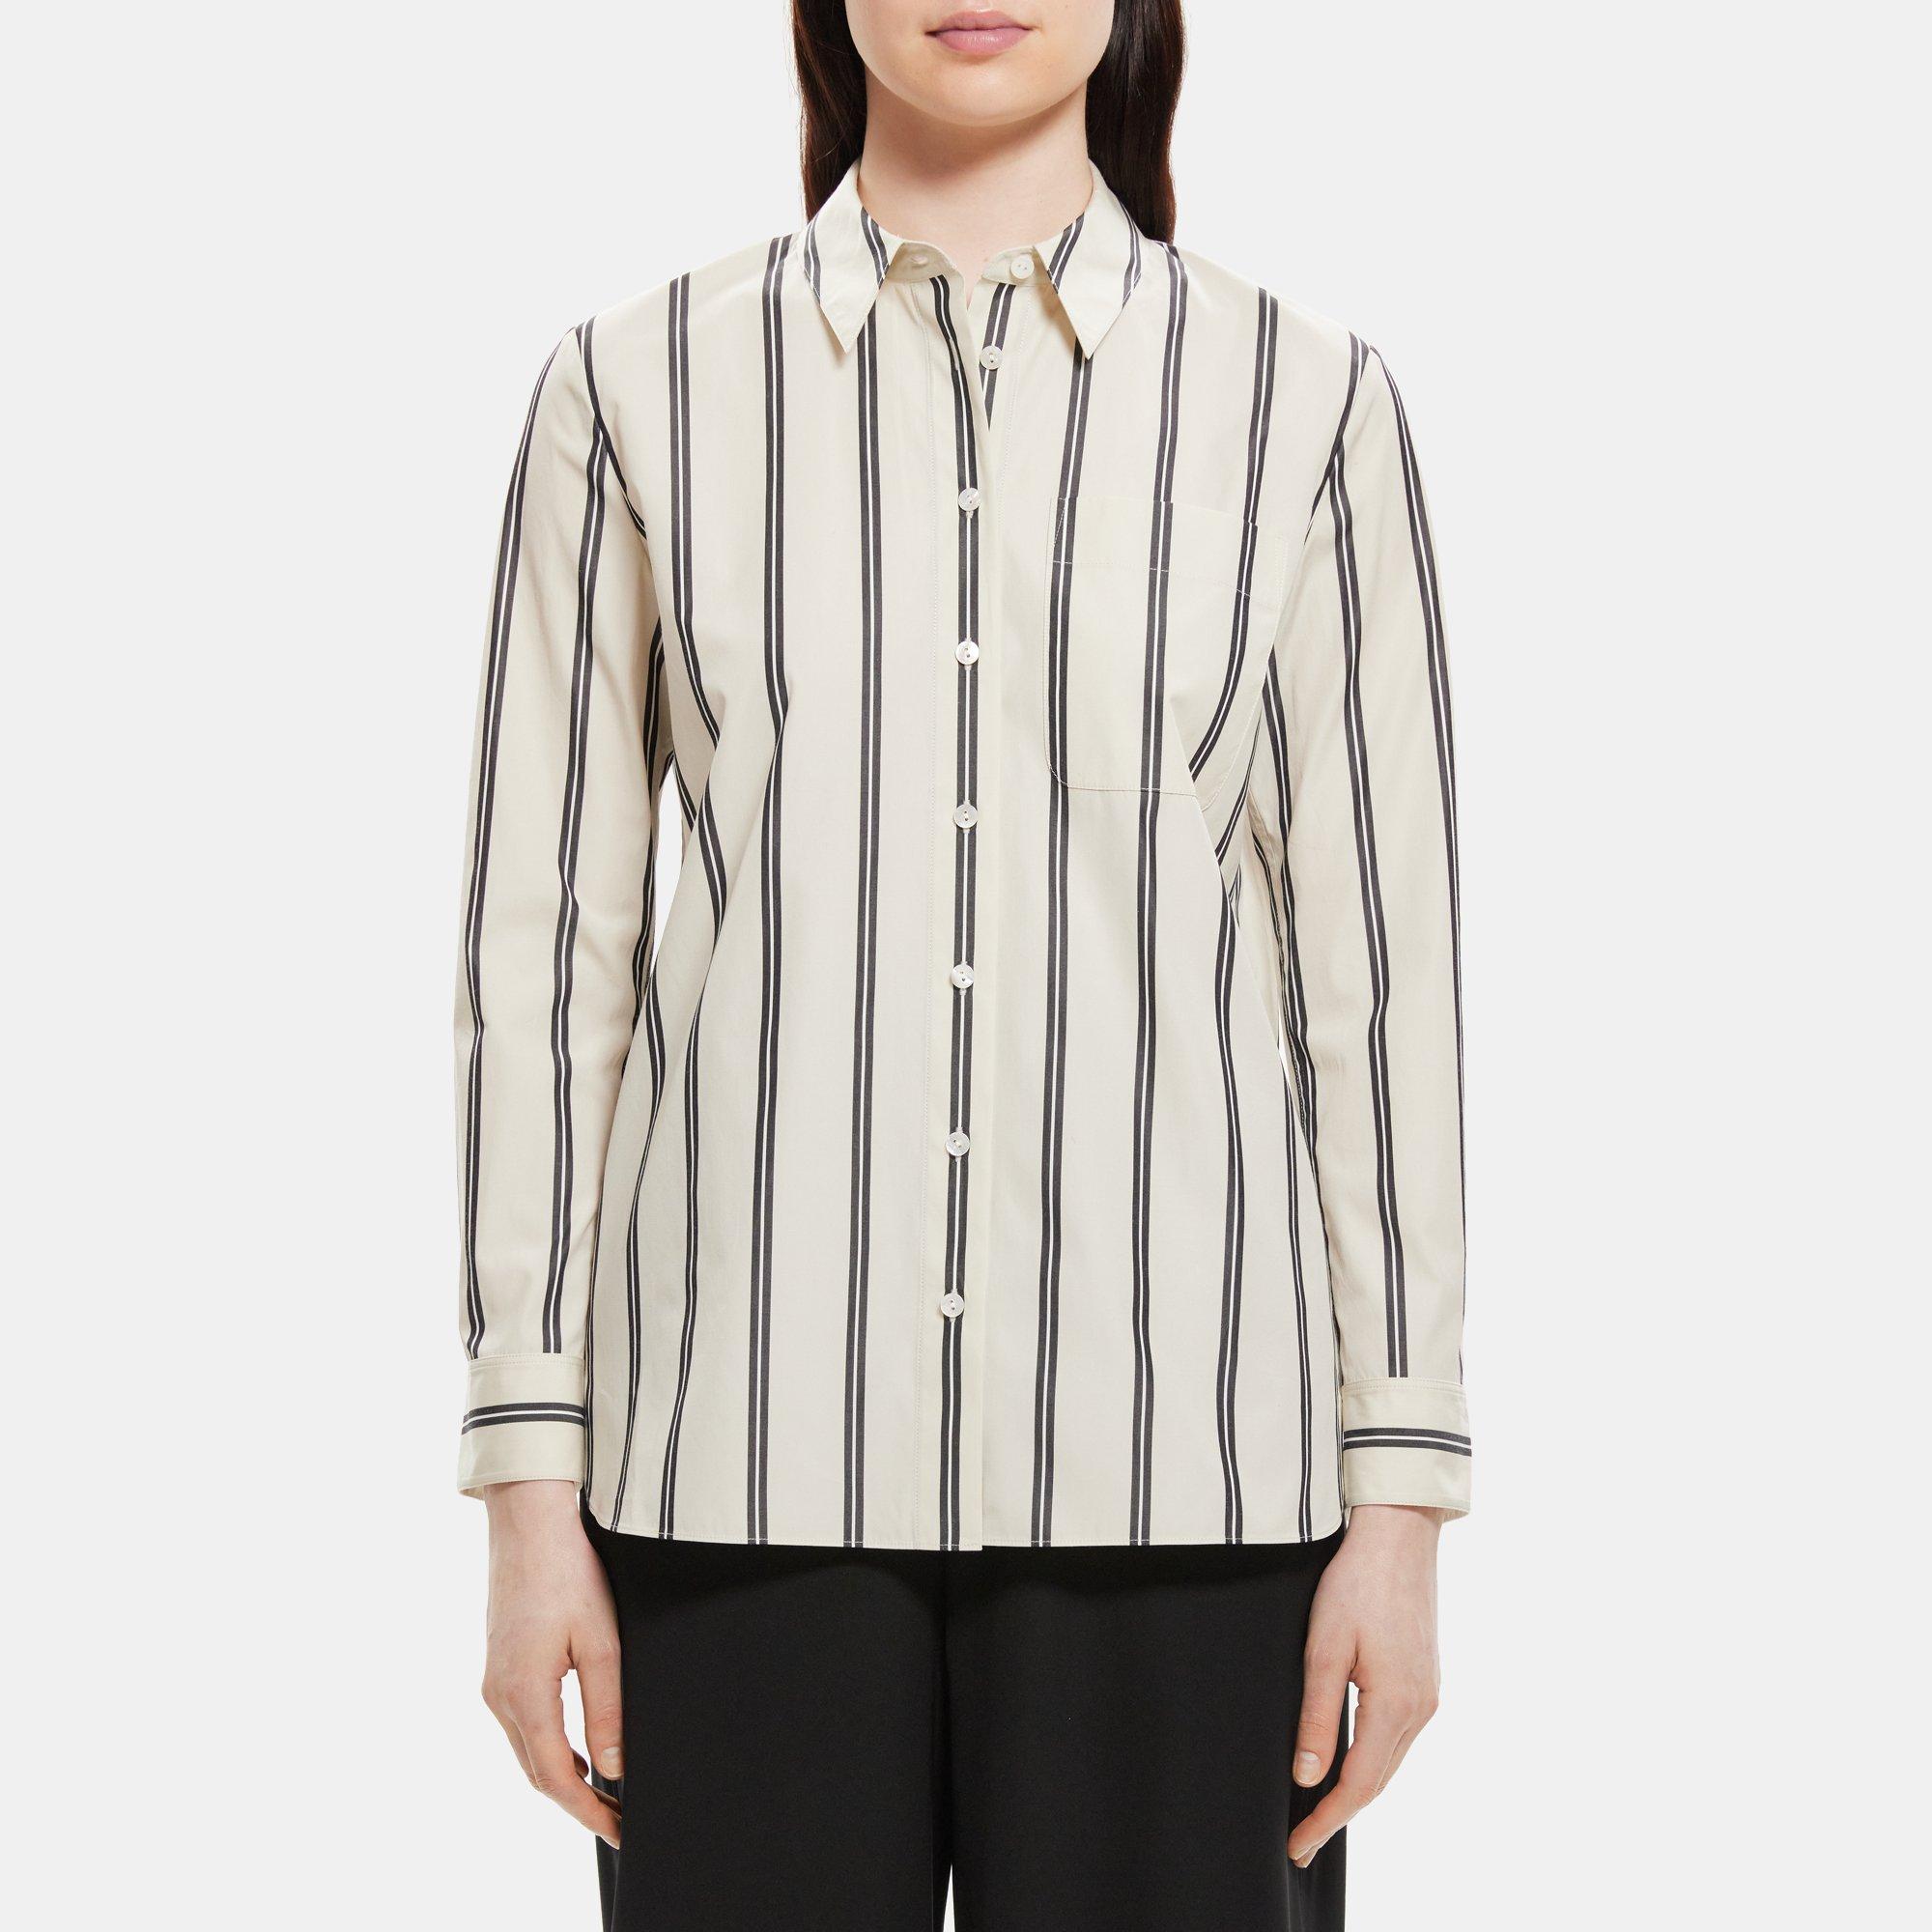 Theory Menswear Shirt in Striped Cotton Poplin